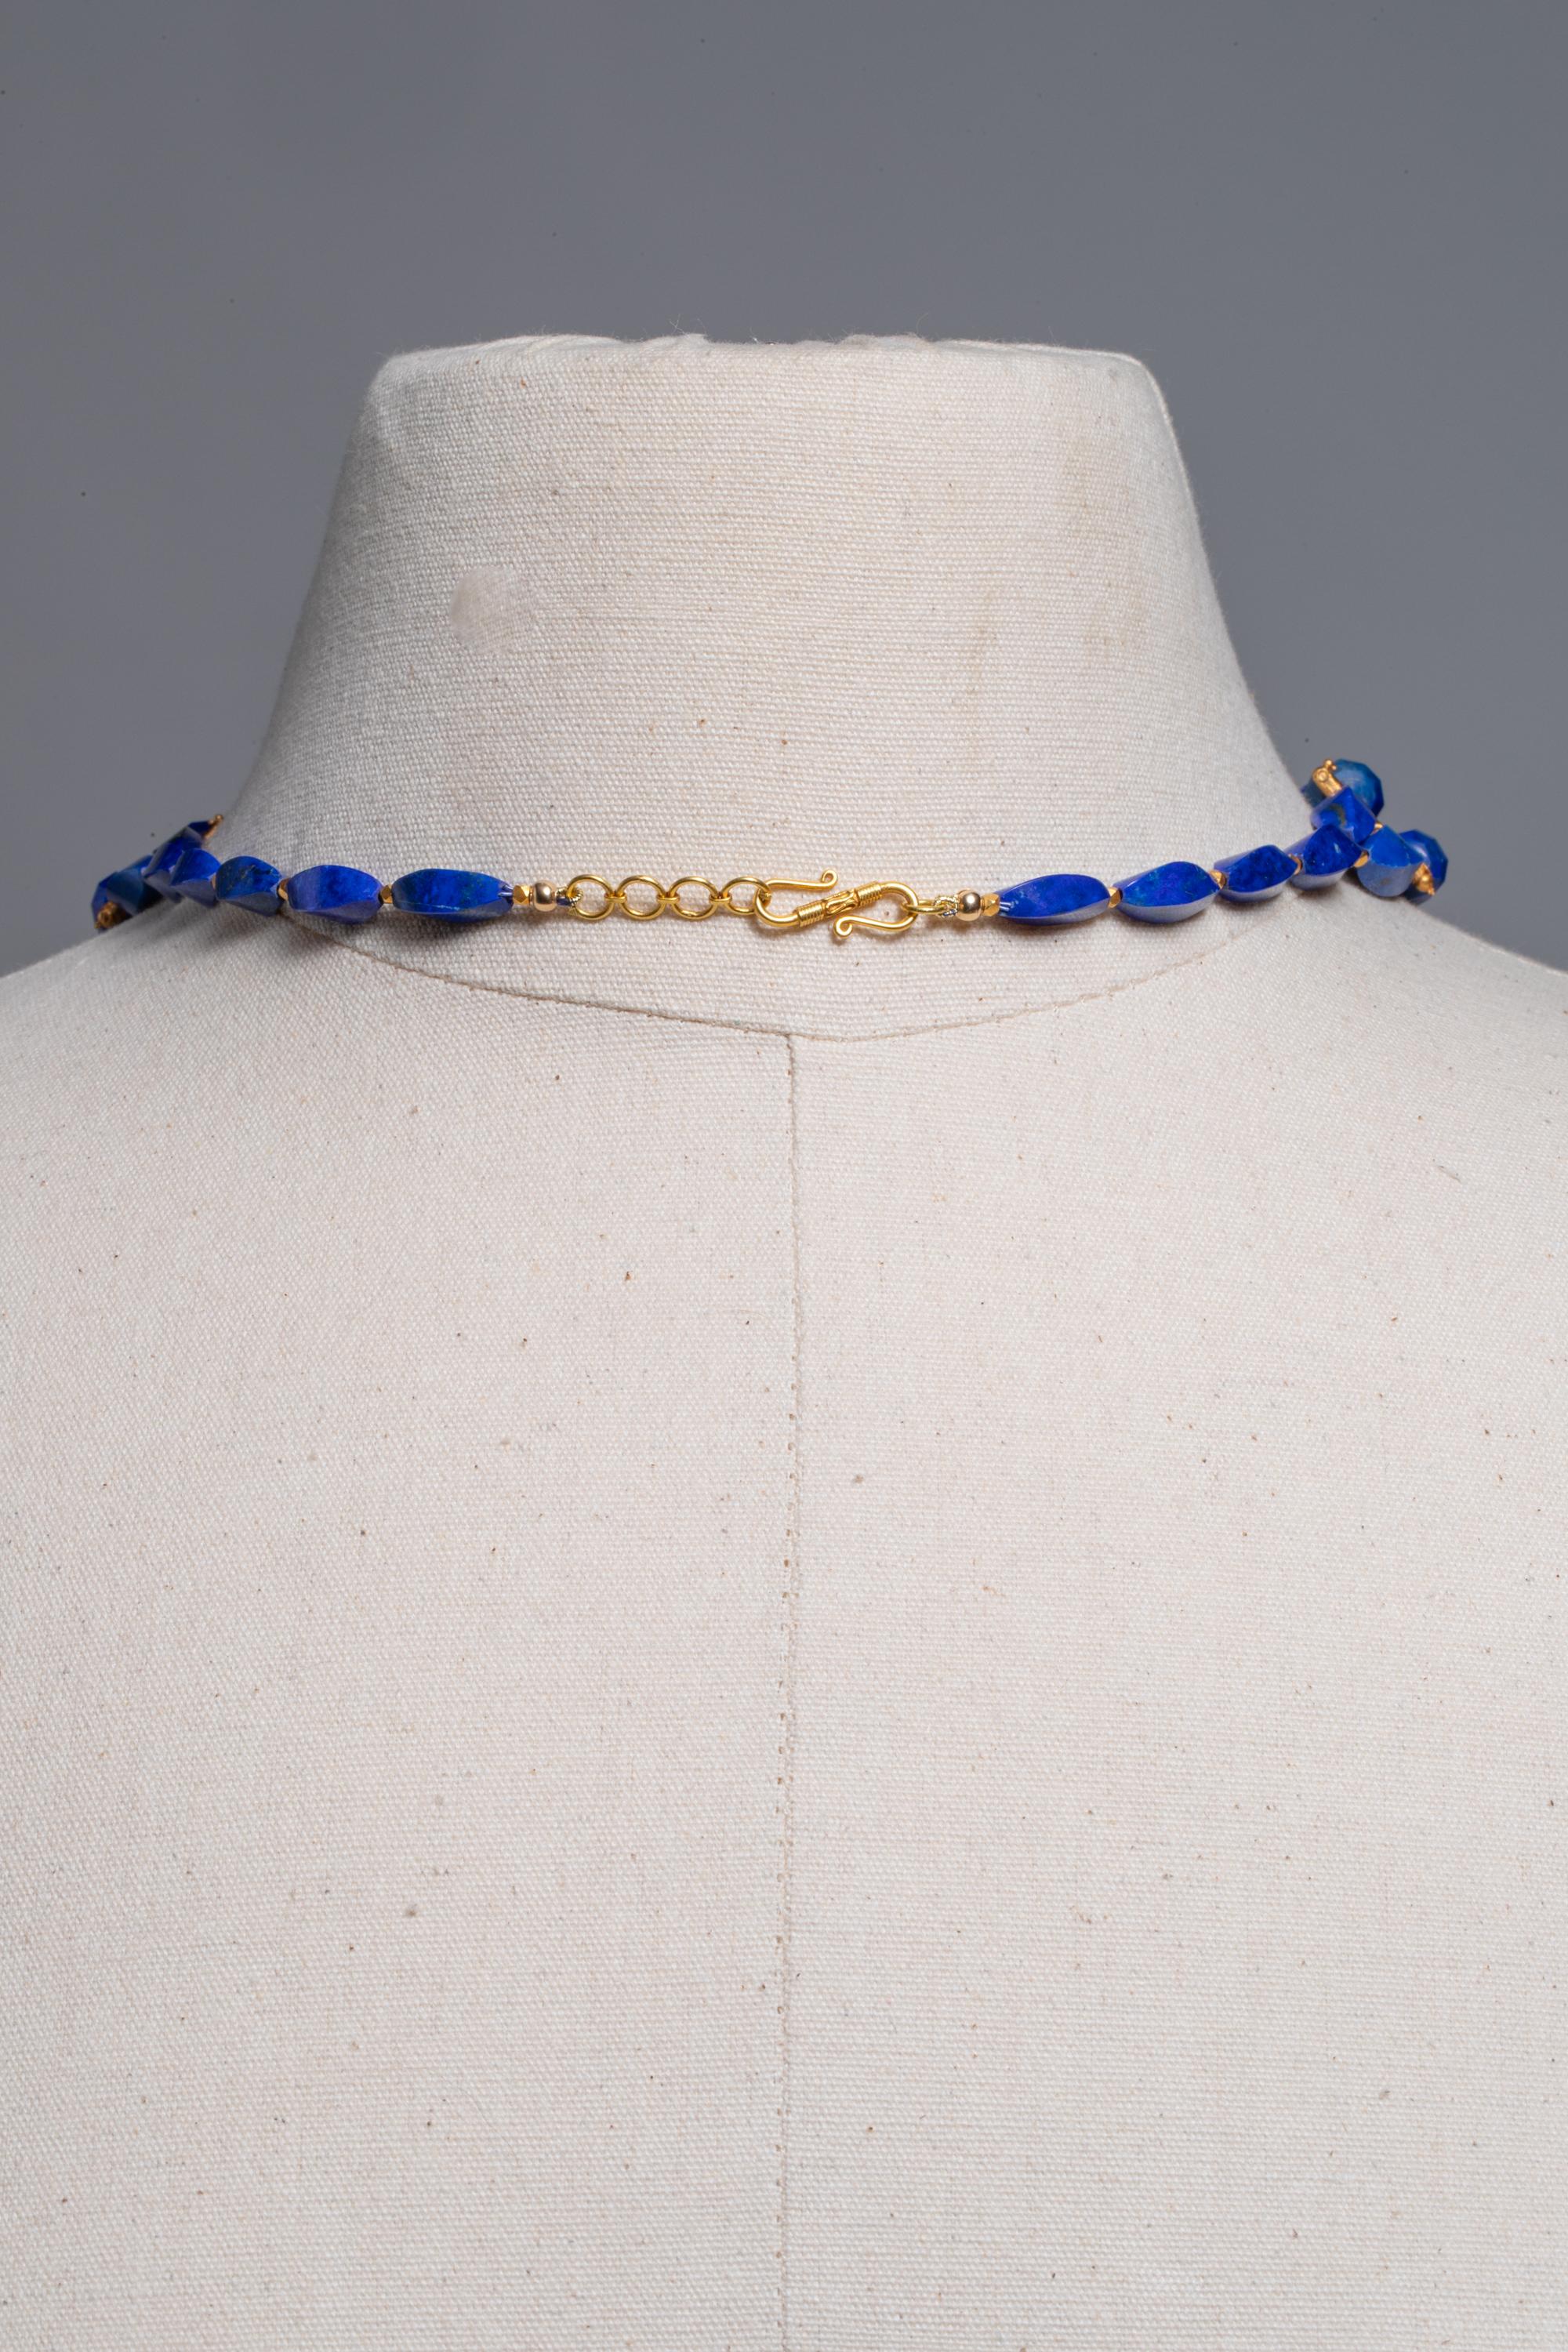 Peacock Blue Lapis, 22 Karat Gold Beaded Necklace by Deborah Lockhart Phillips 3